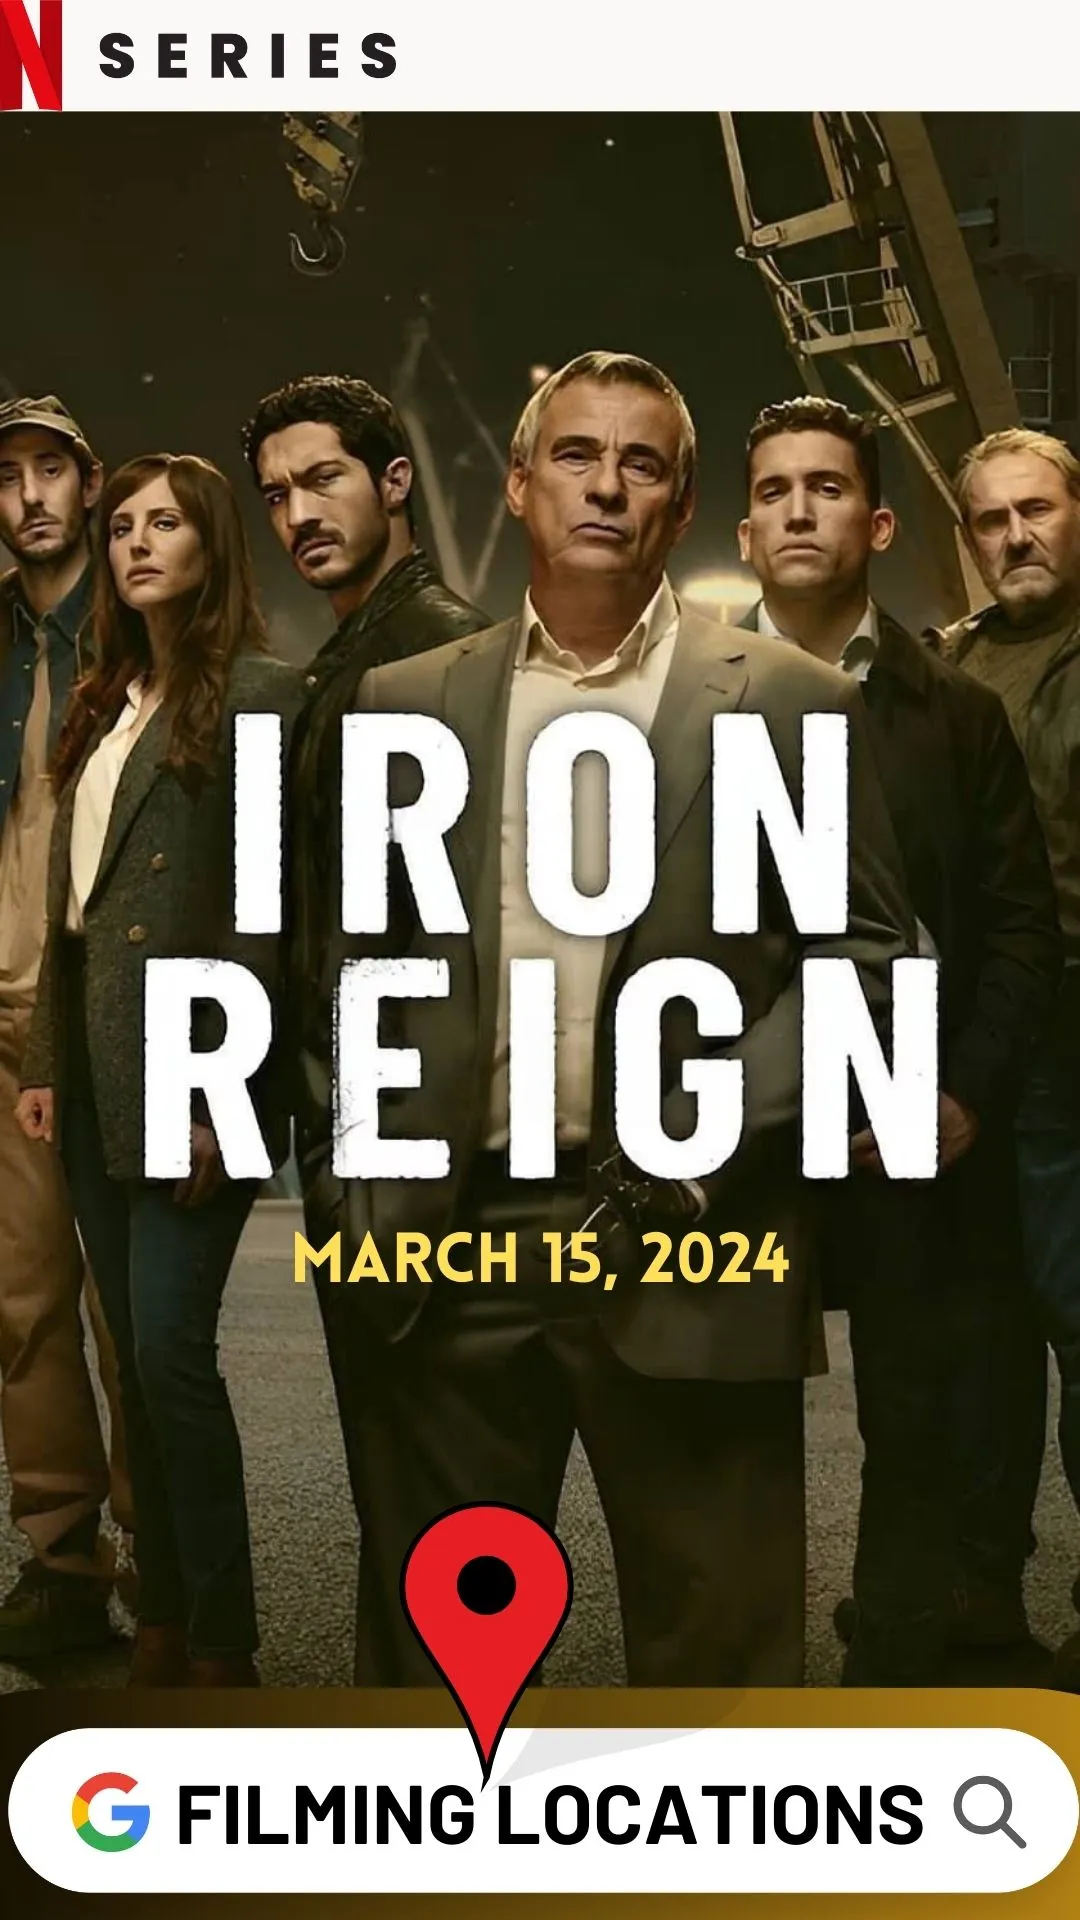 Where Is Iron Reign Filmed